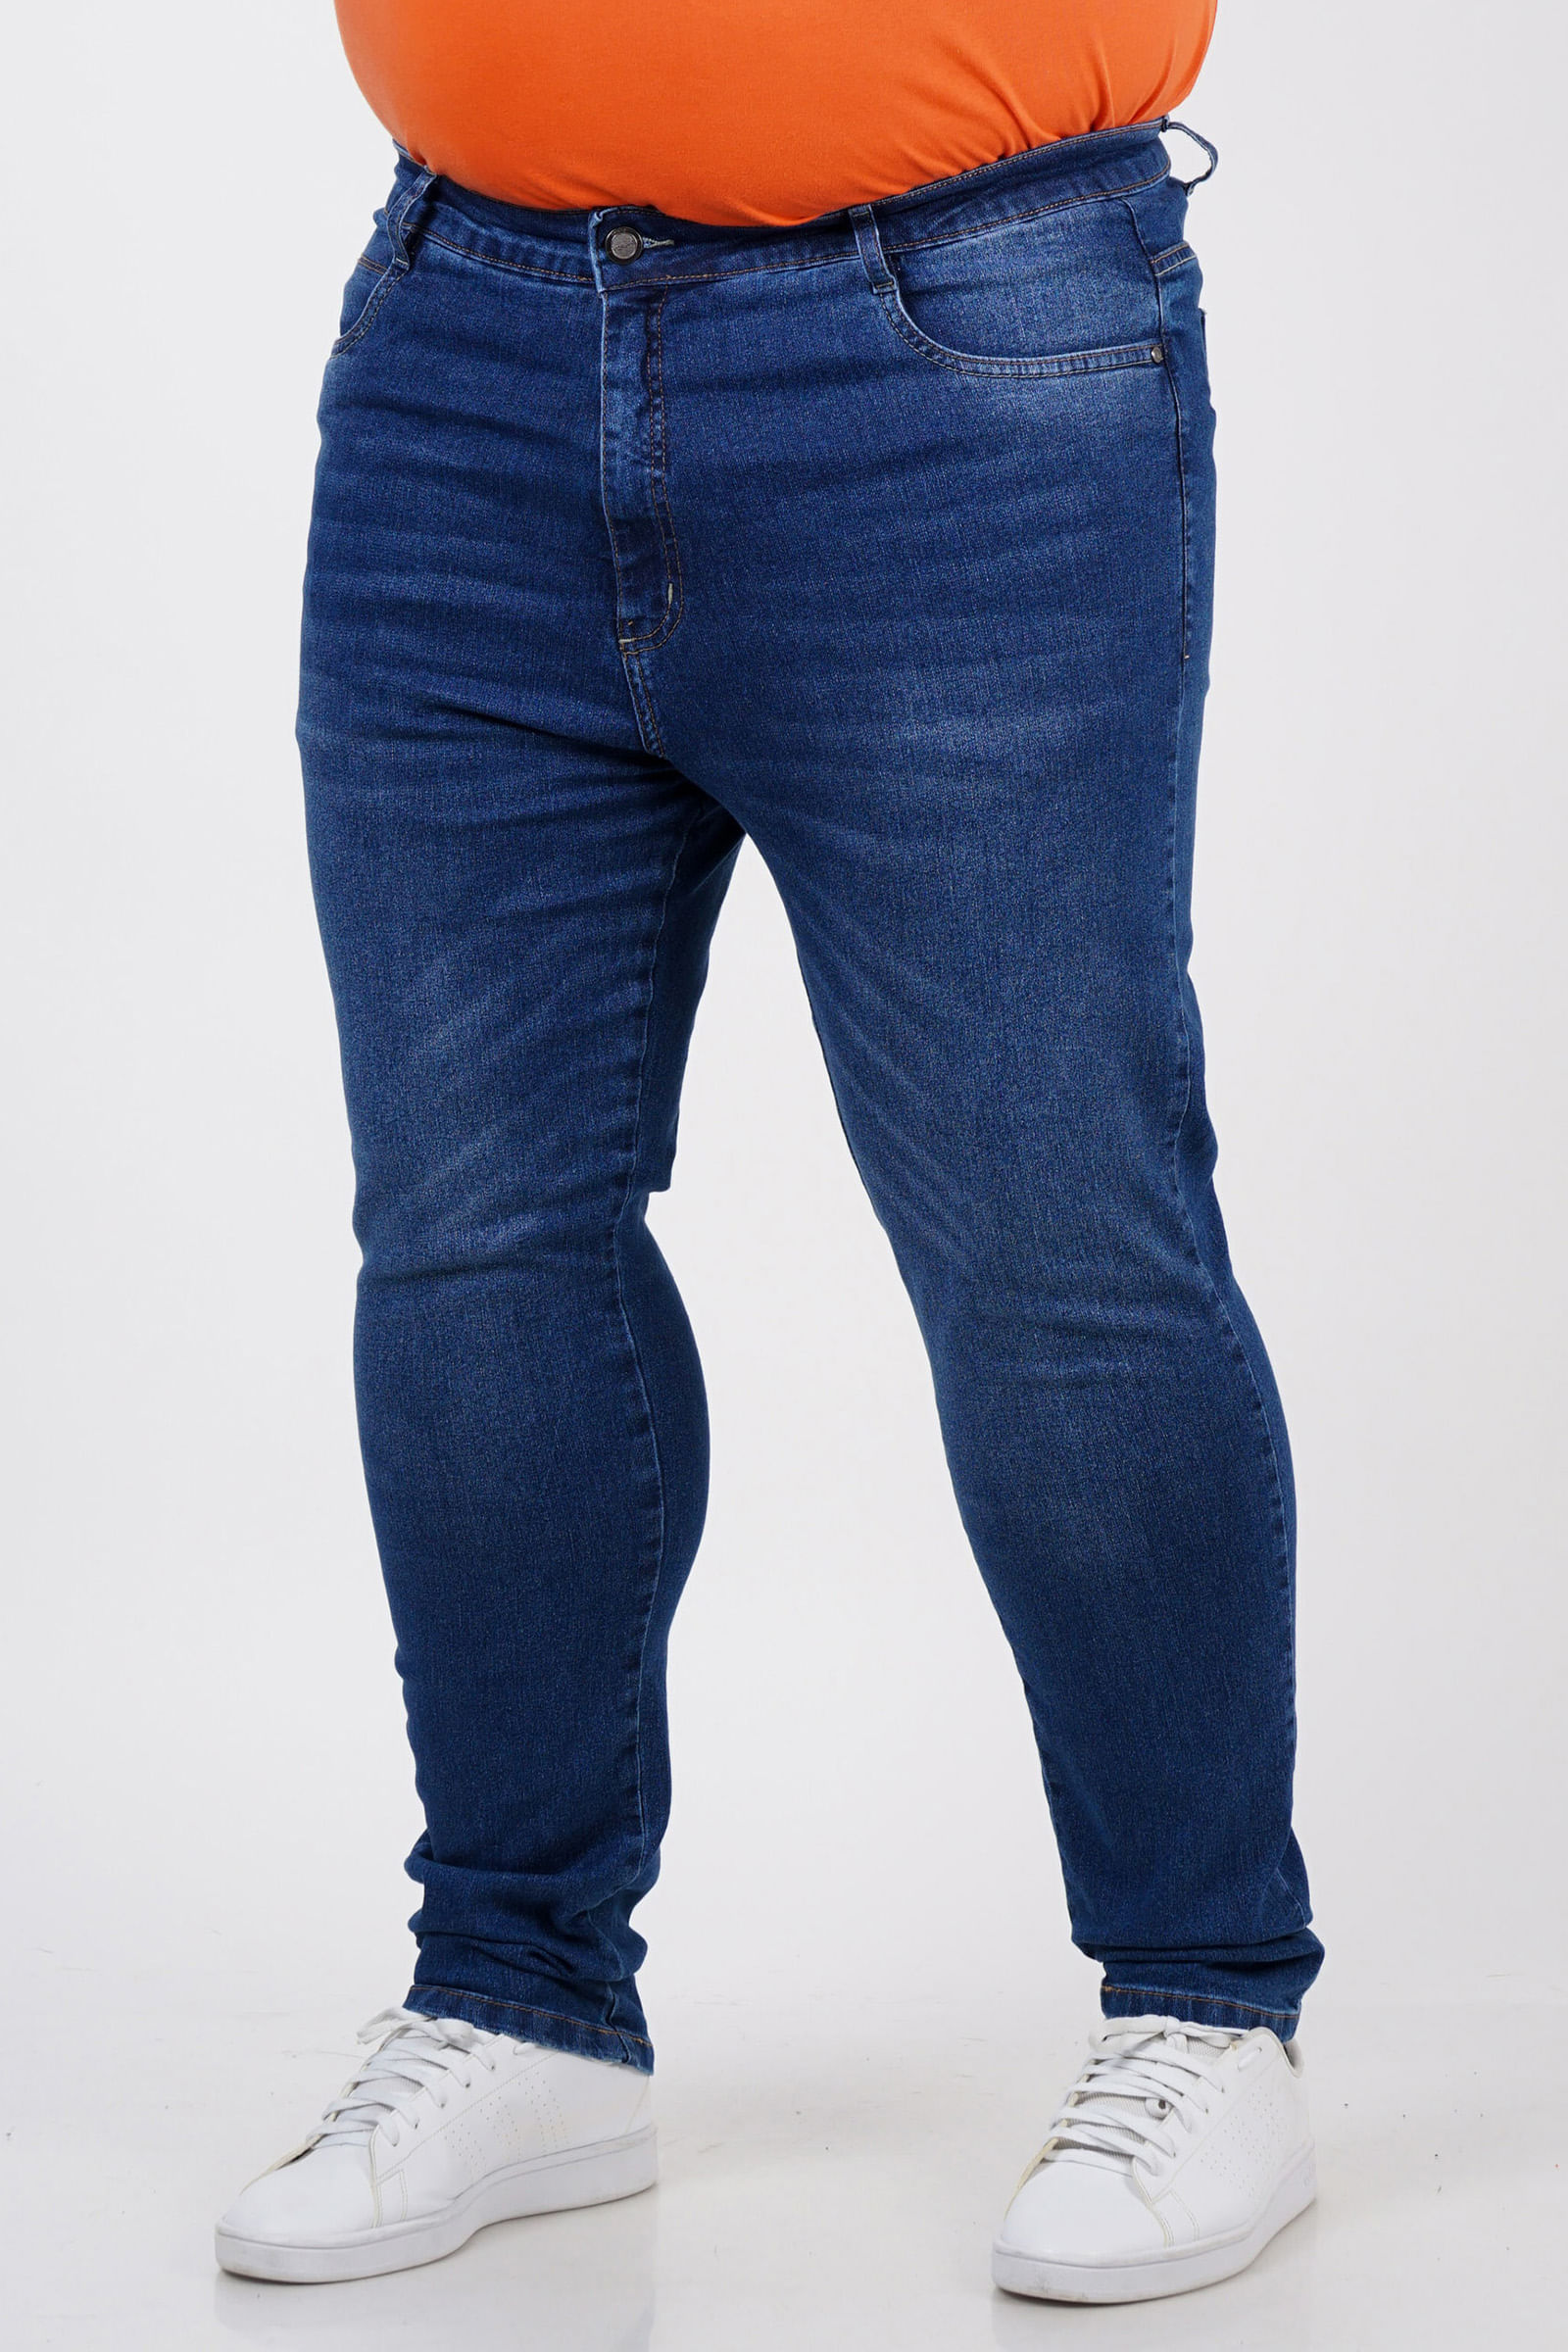 Calca-jeans-skinny-plus-size_0102_1